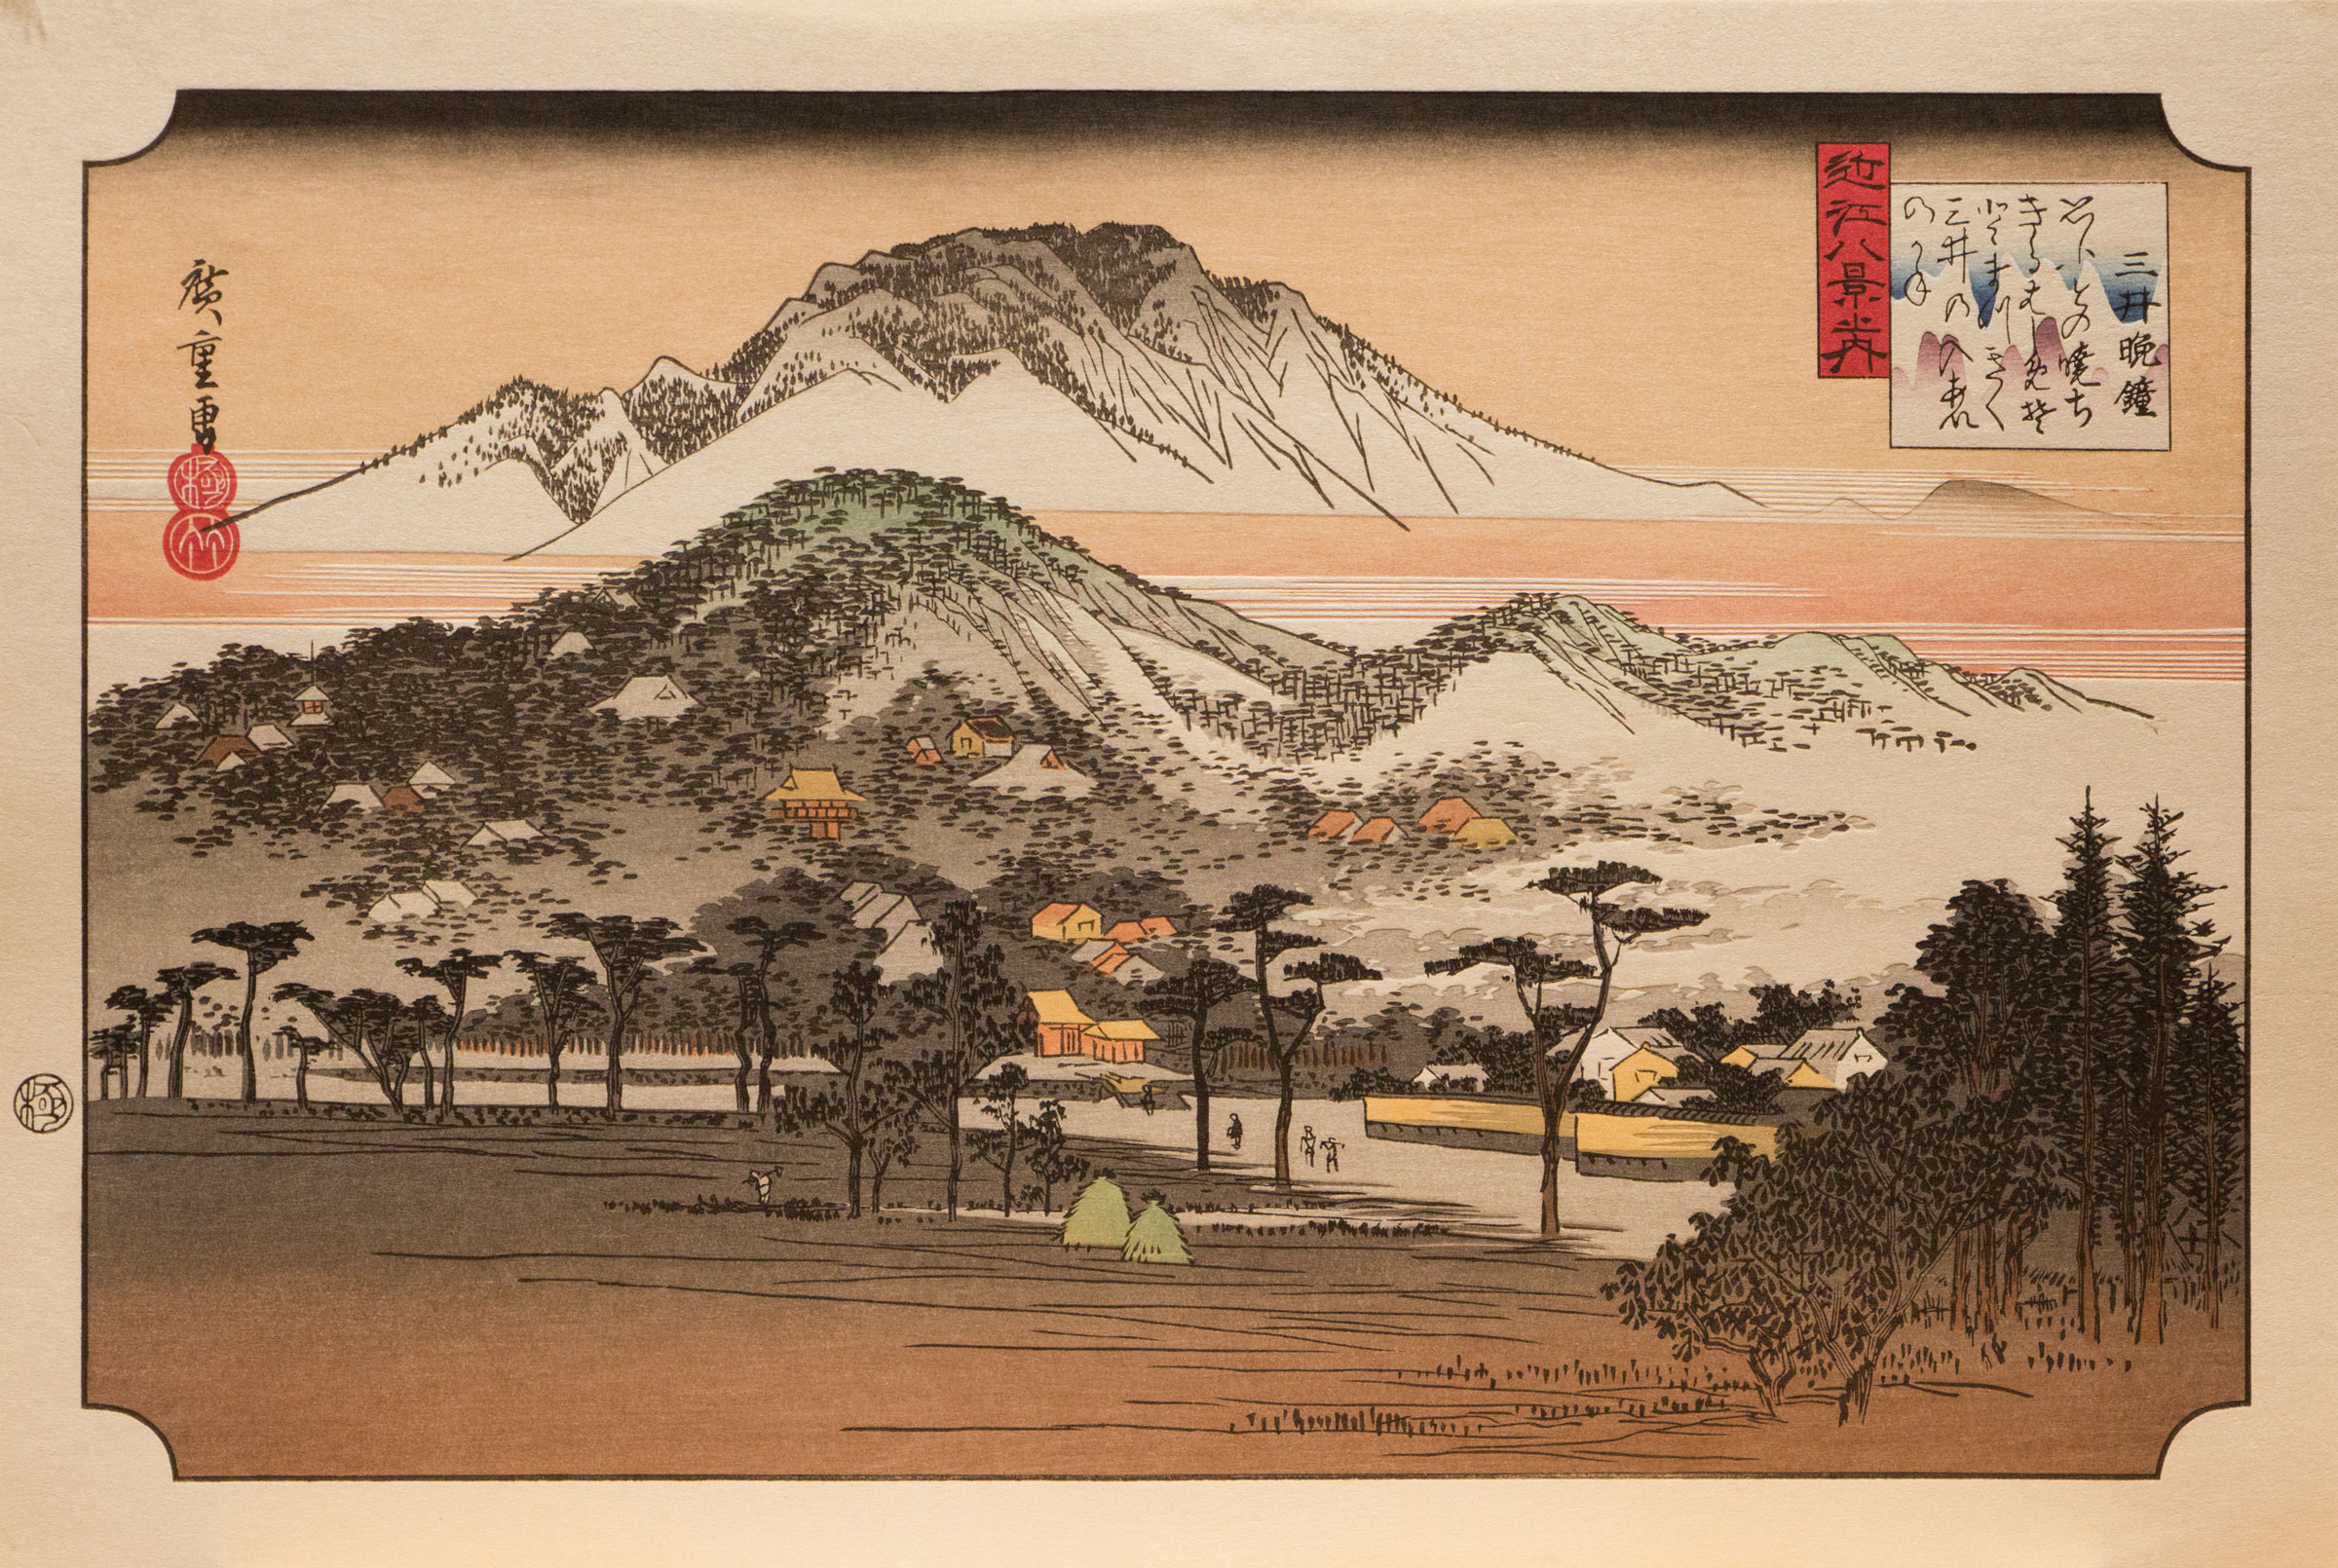 General 2400x1610 Utagawa Hiroshige woodblock print Japanese Art traditional art mountains trees landscape evening glow